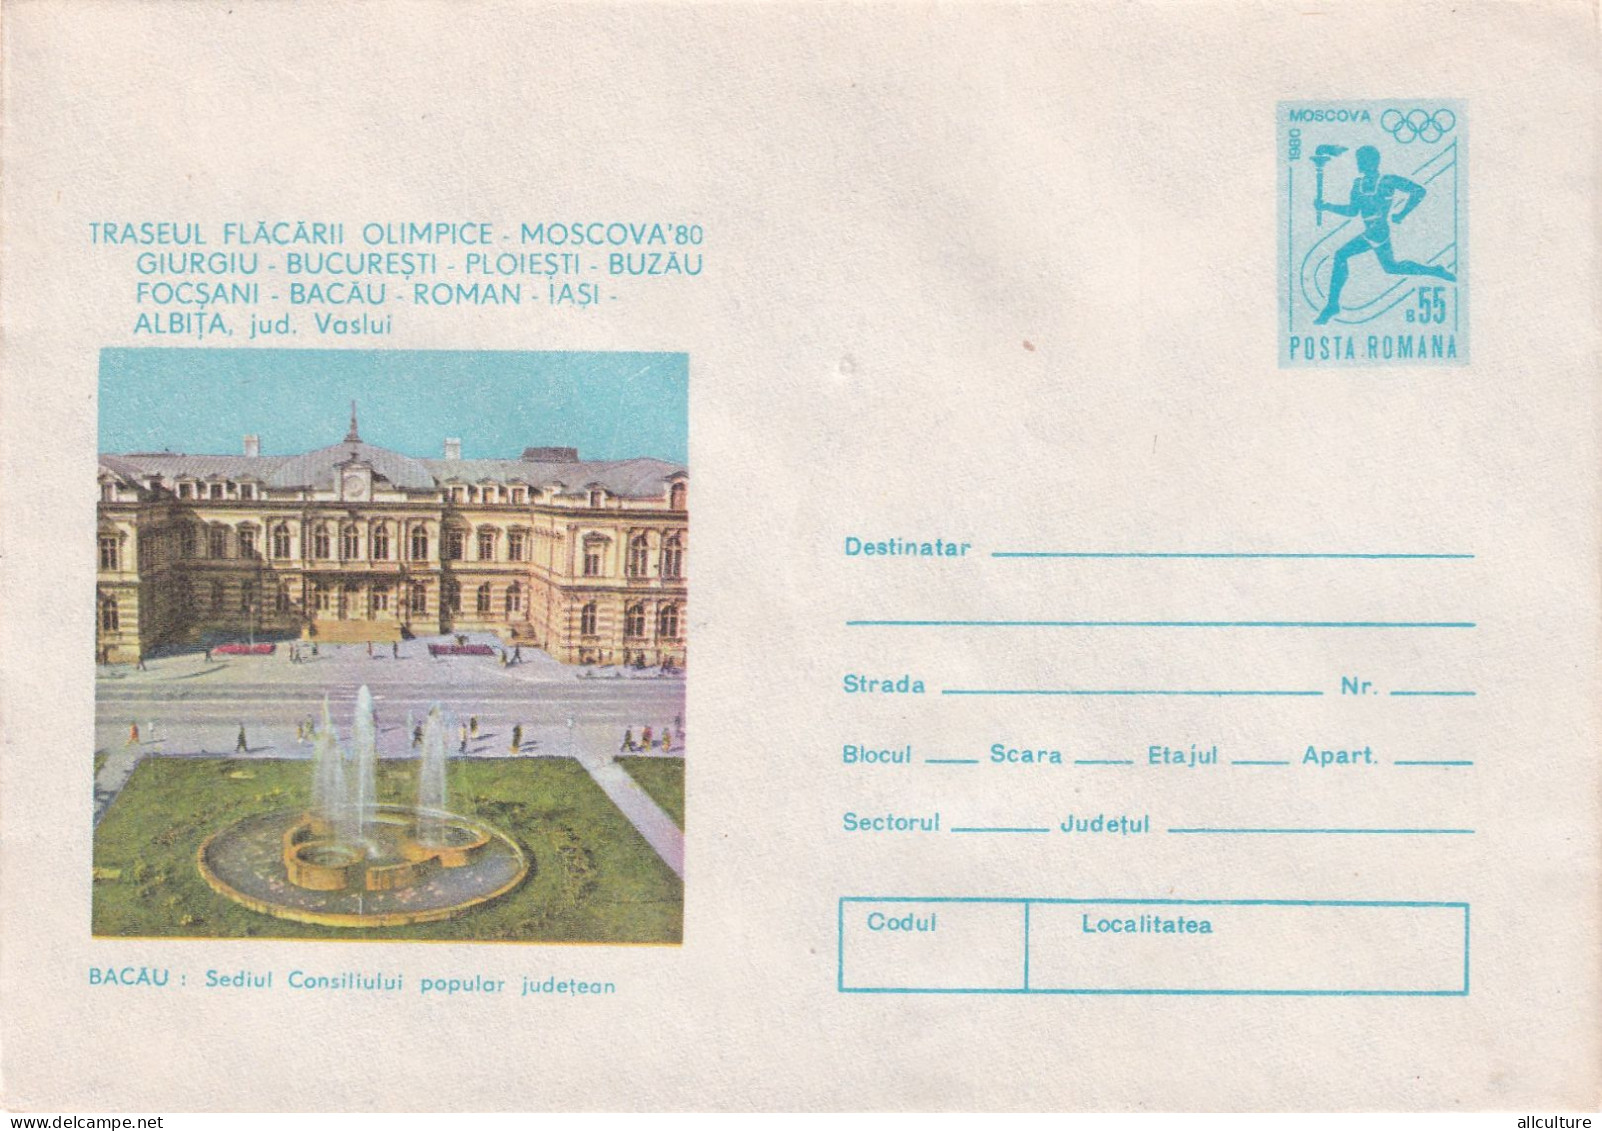 A24571 - BACAU SEDIUL CONSILIULUI POPULAR JUDETEAN  Cover Stationery Romania 1969 - Postal Stationery